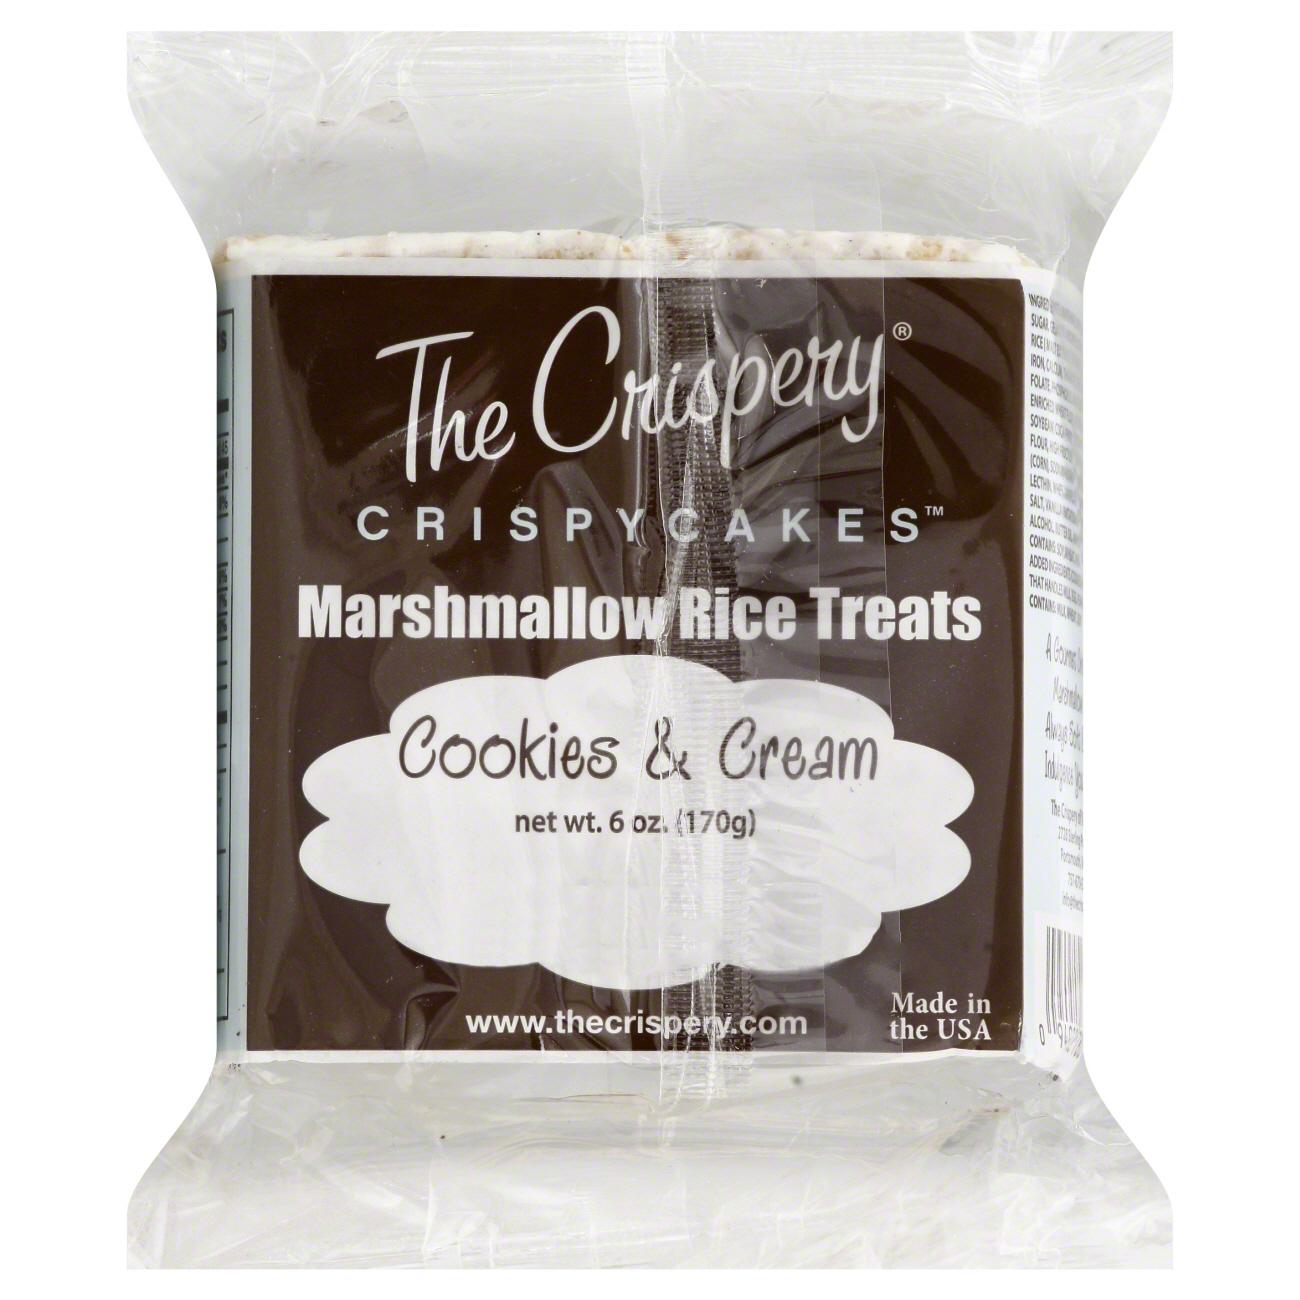 The Crispery Crispycakes Marshmallow Rice Treats, Cookies & Cream; image 2 of 2